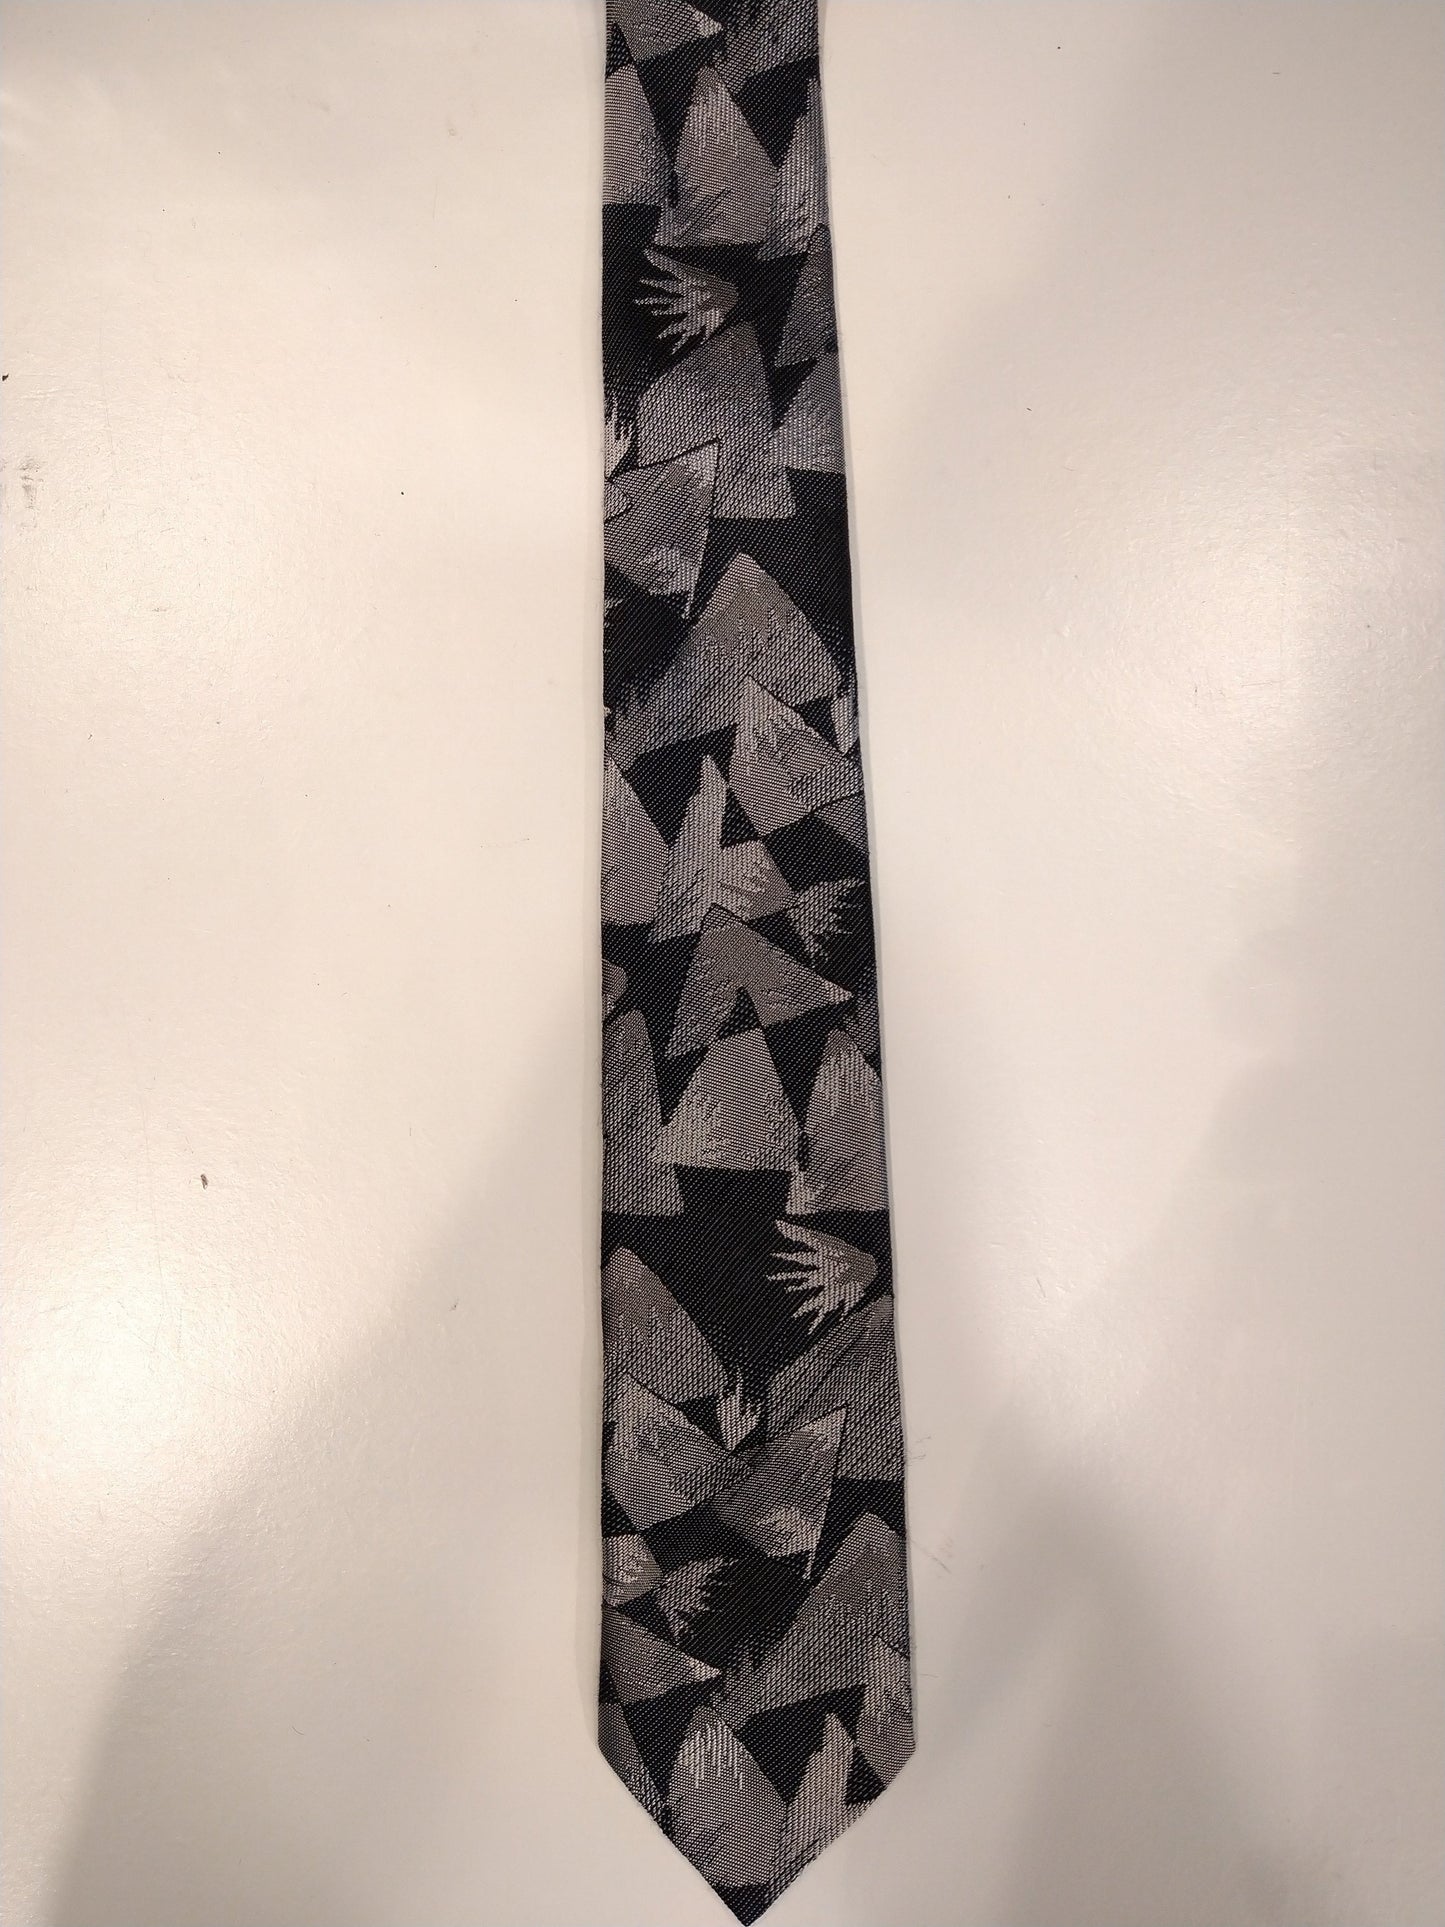 Vintage Skat Extra schmale Krawatte. Schwarzes graues Motiv.